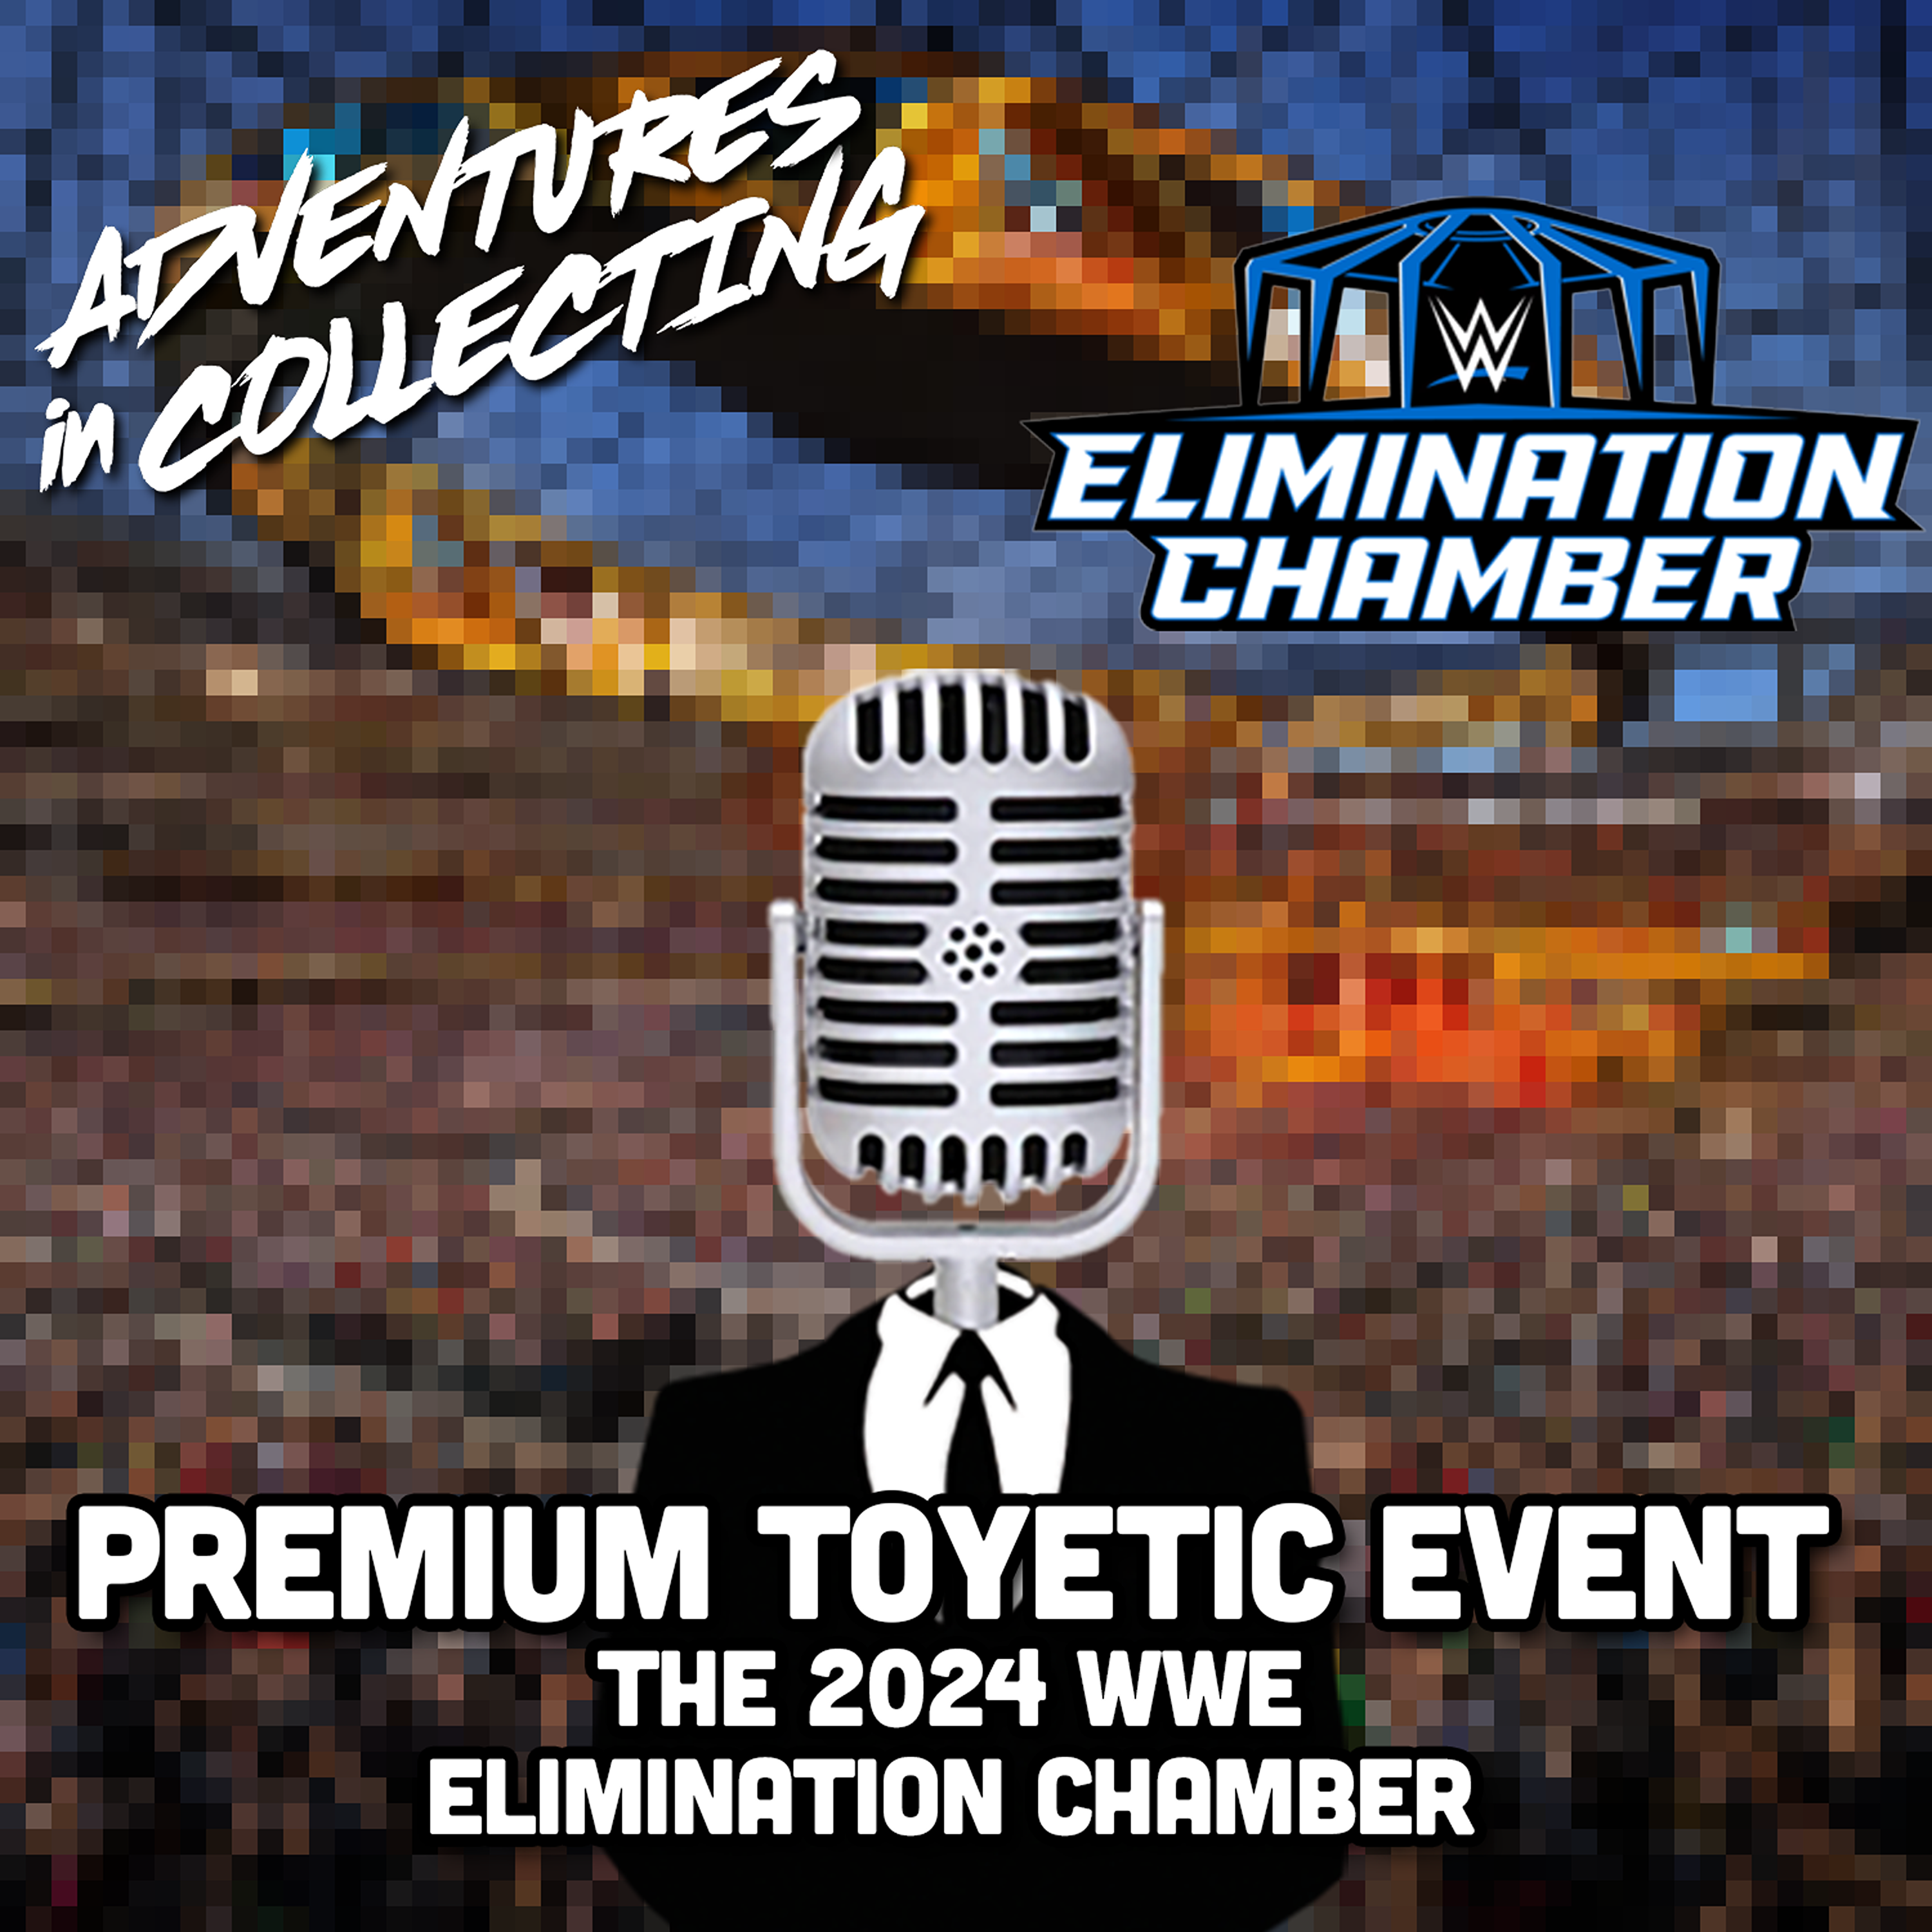 Premium Toyetic Event: The 2024 WWE Elimination Chamber